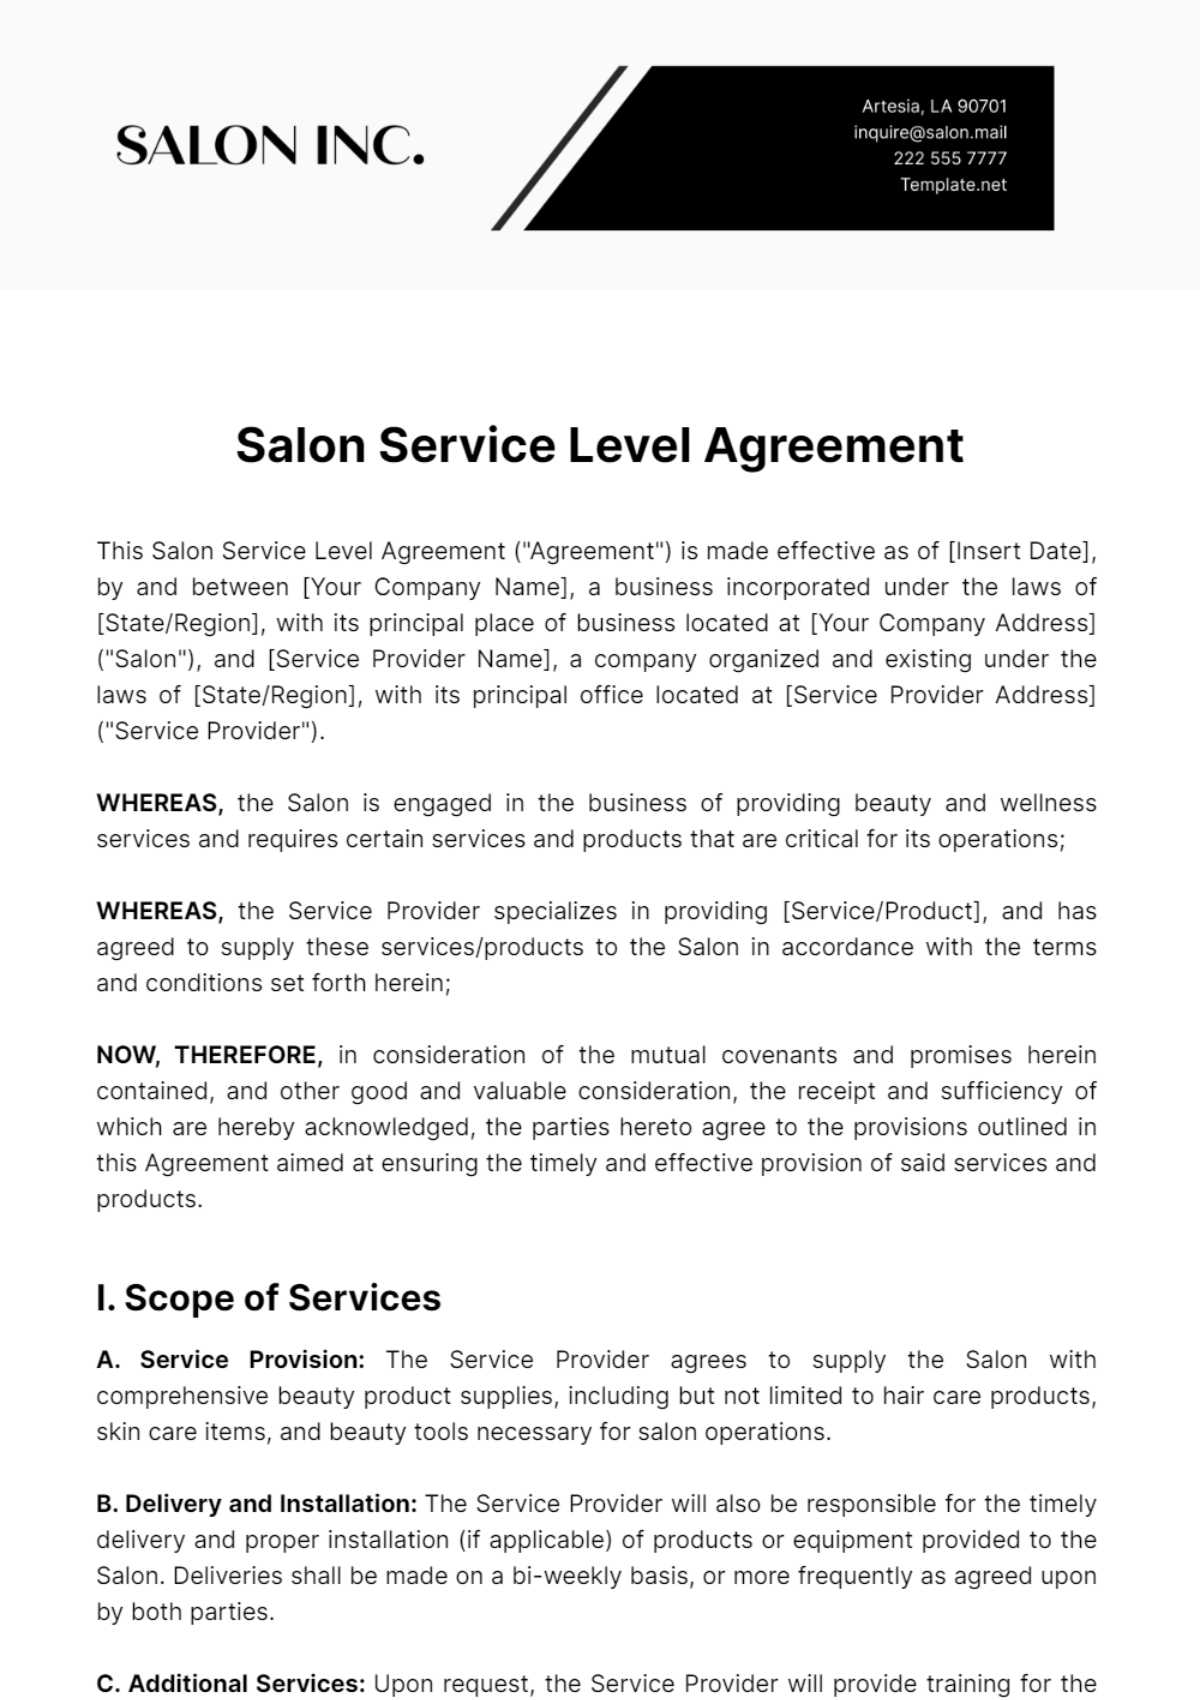 Salon Service Level Agreement Template